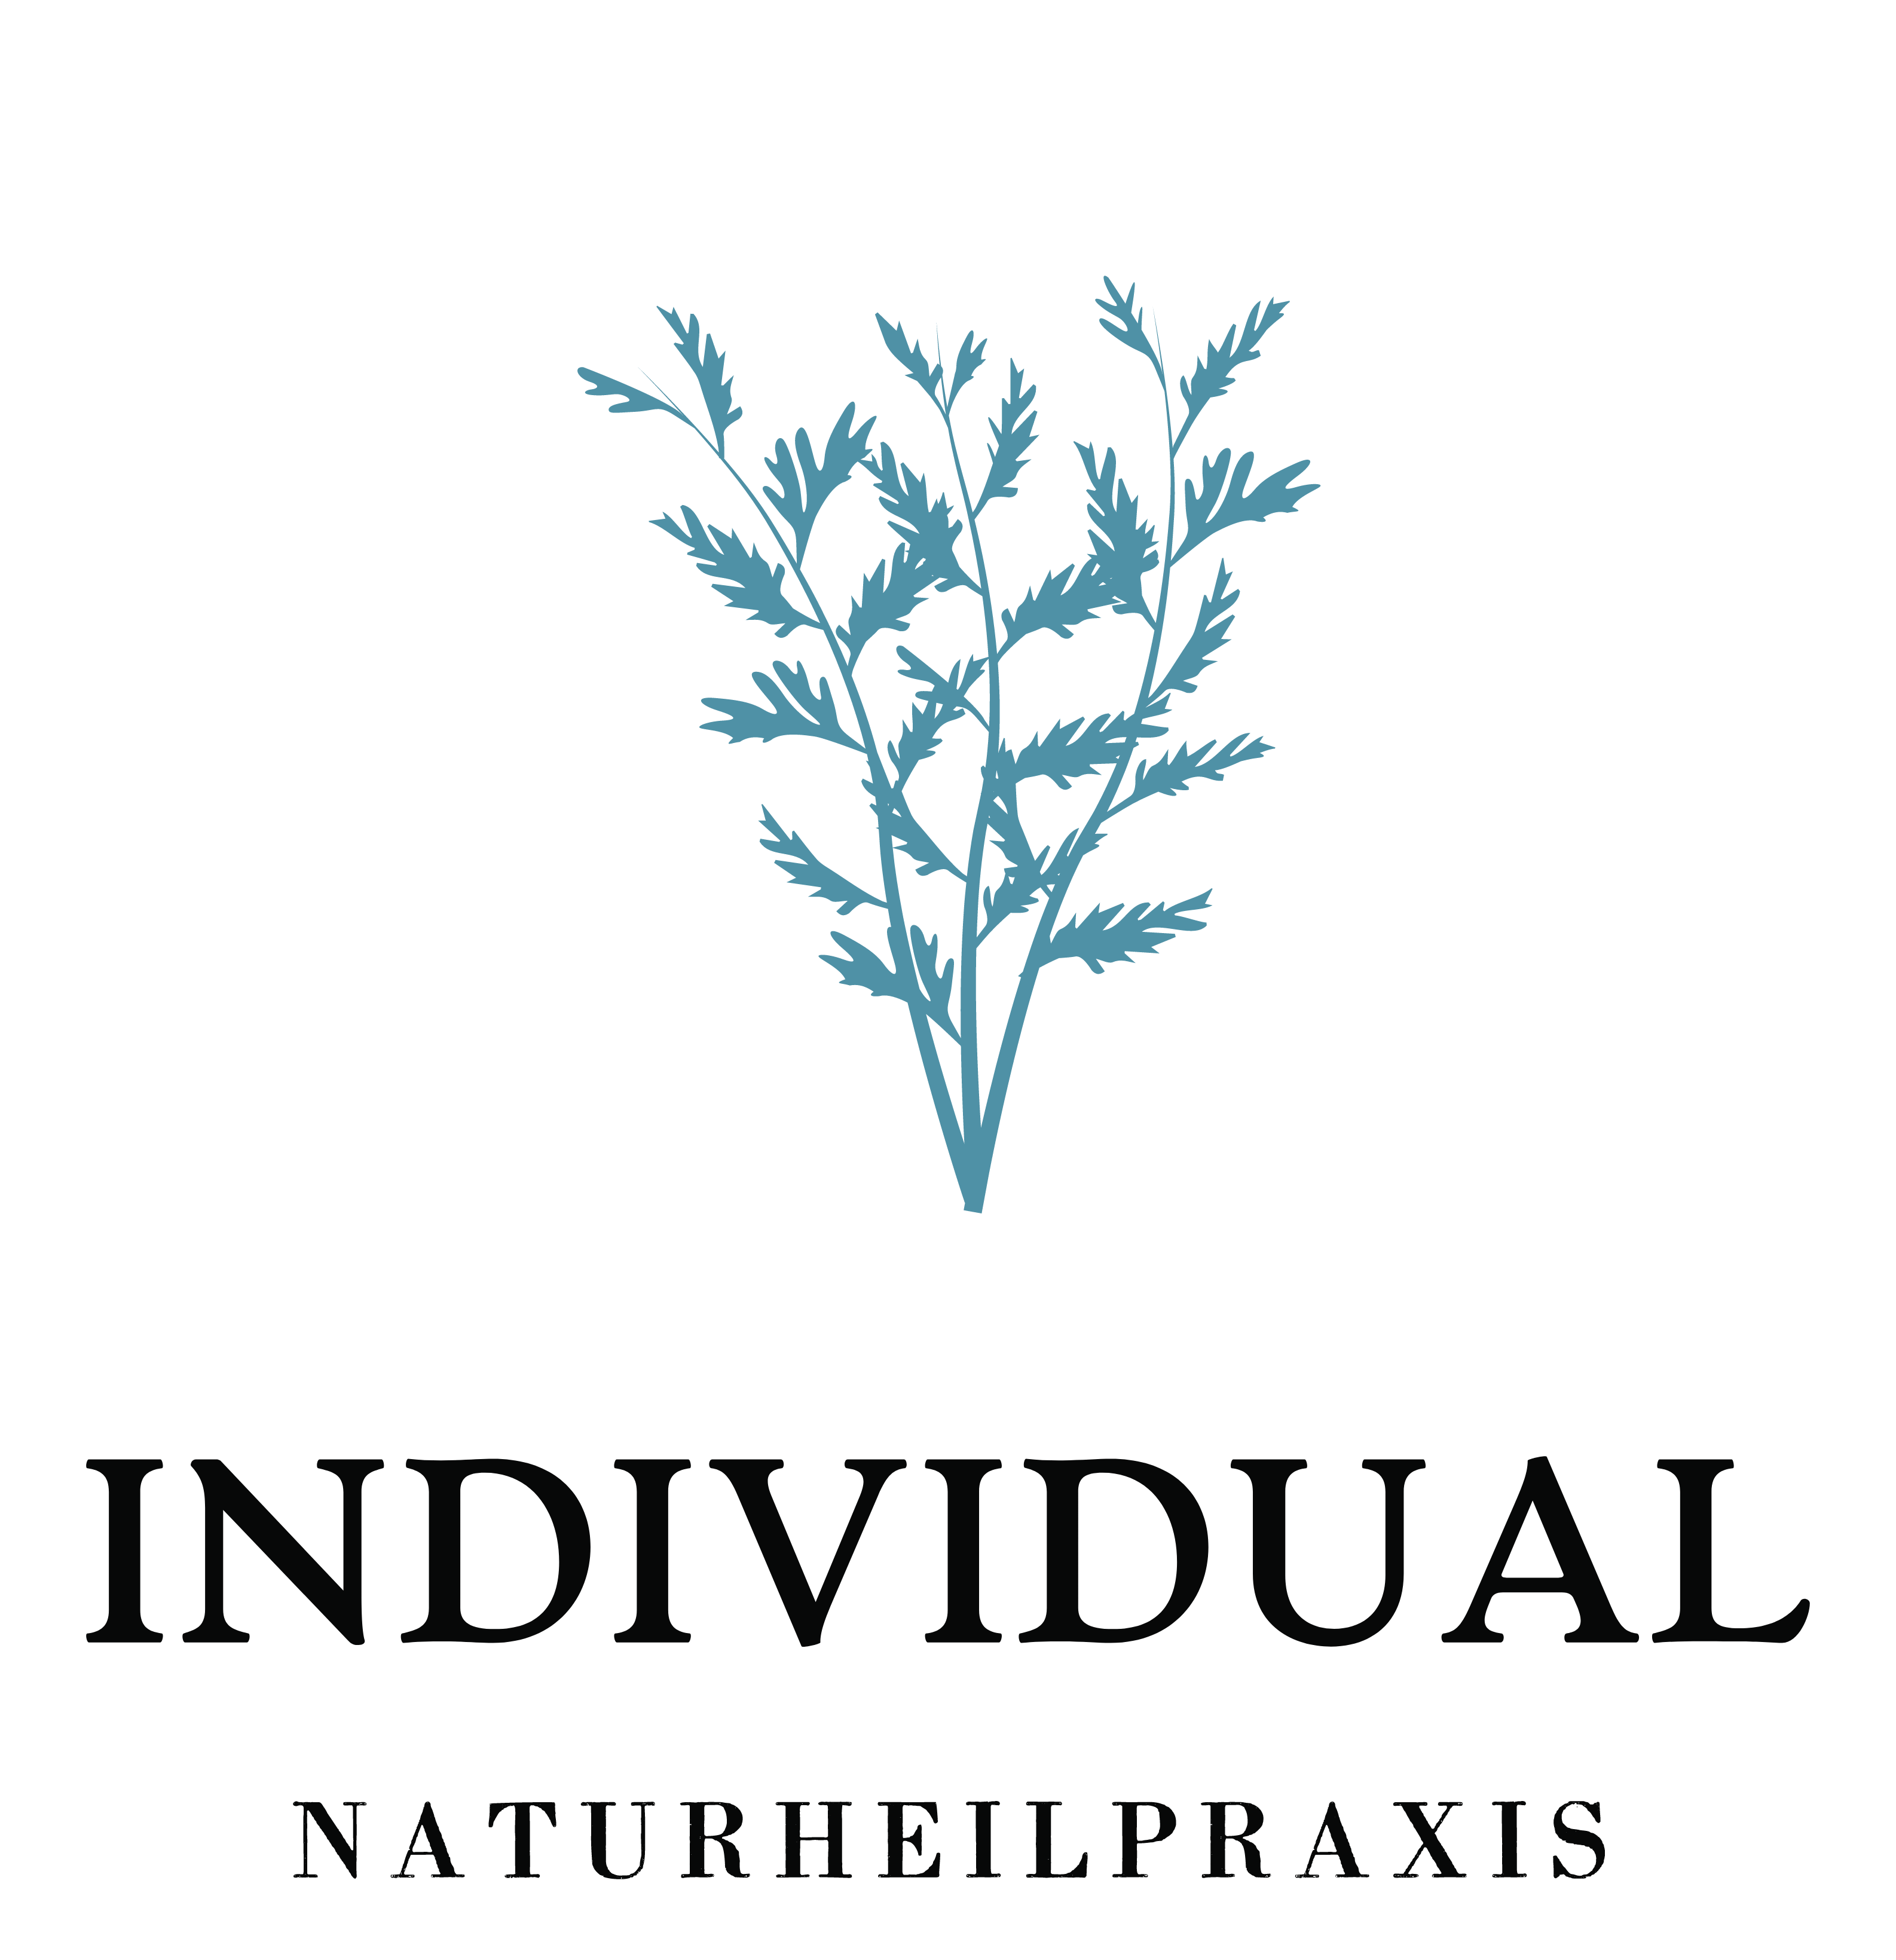 Naturheilpraxis Individual